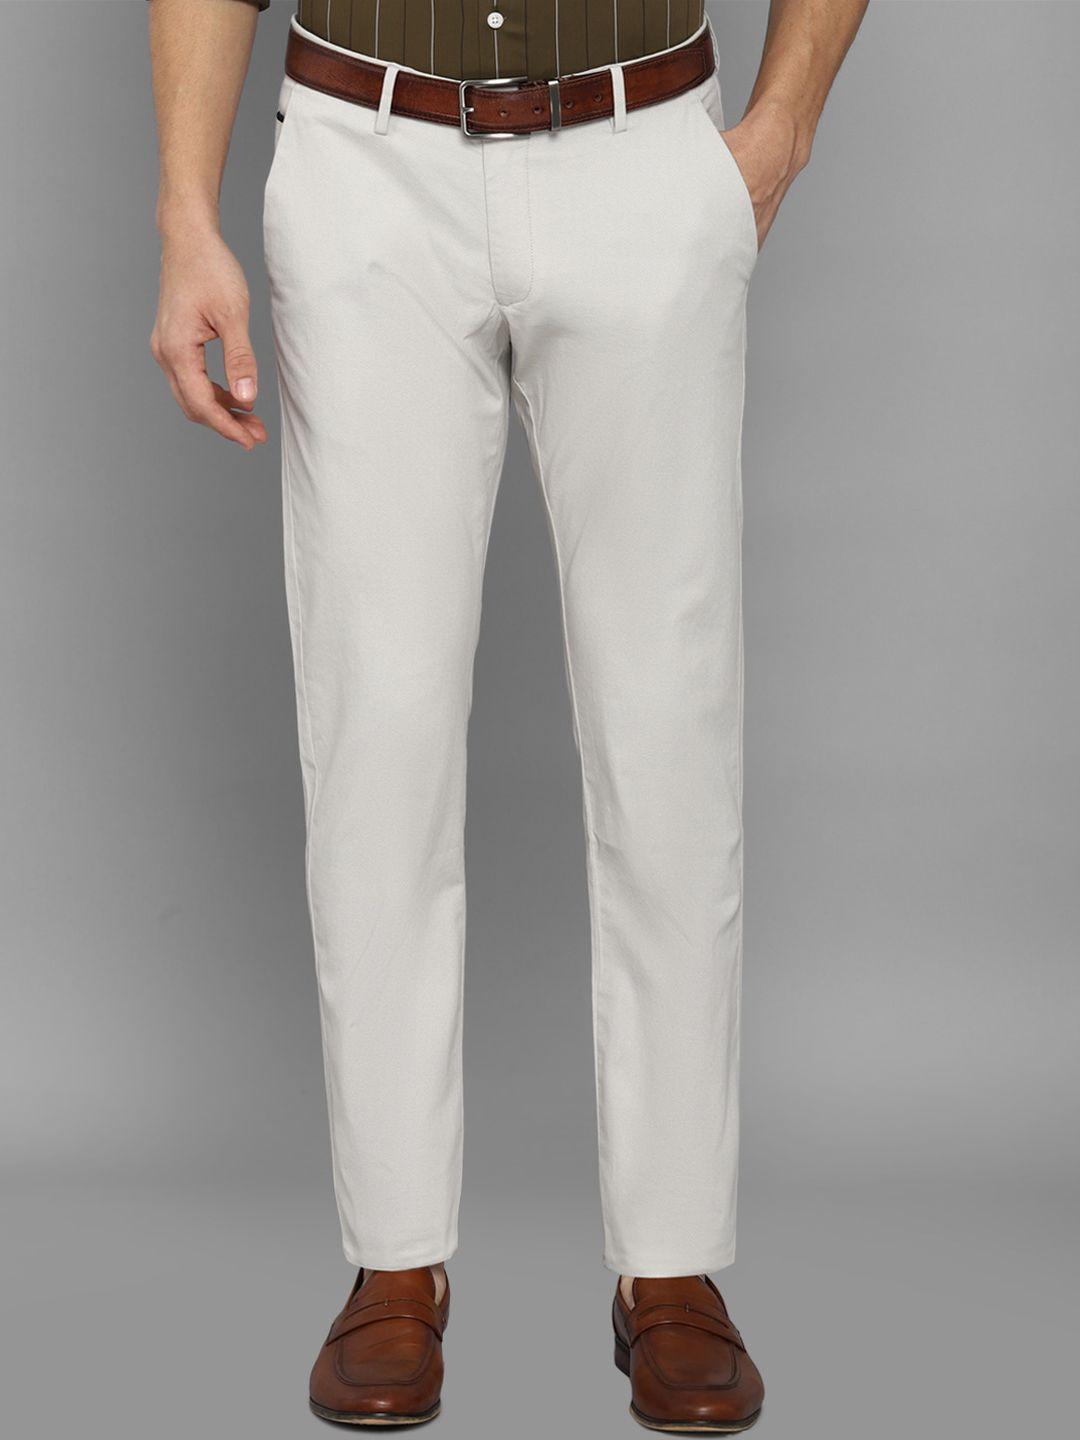 allen-solly-men-cream-coloured-trousers